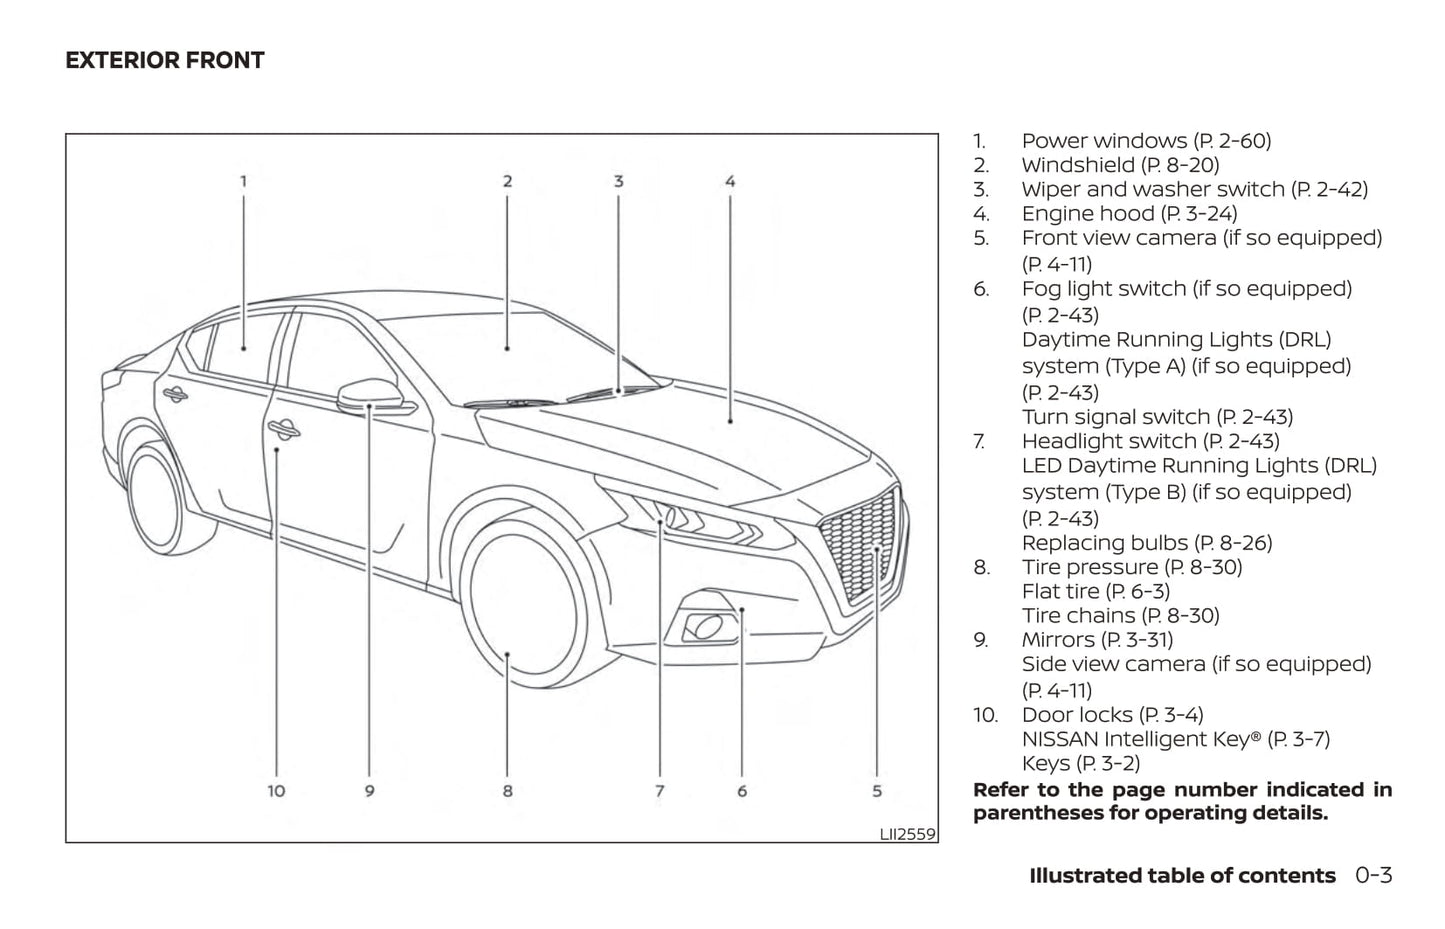 2019 Nissan Altima Sedan Owner's Manual | English